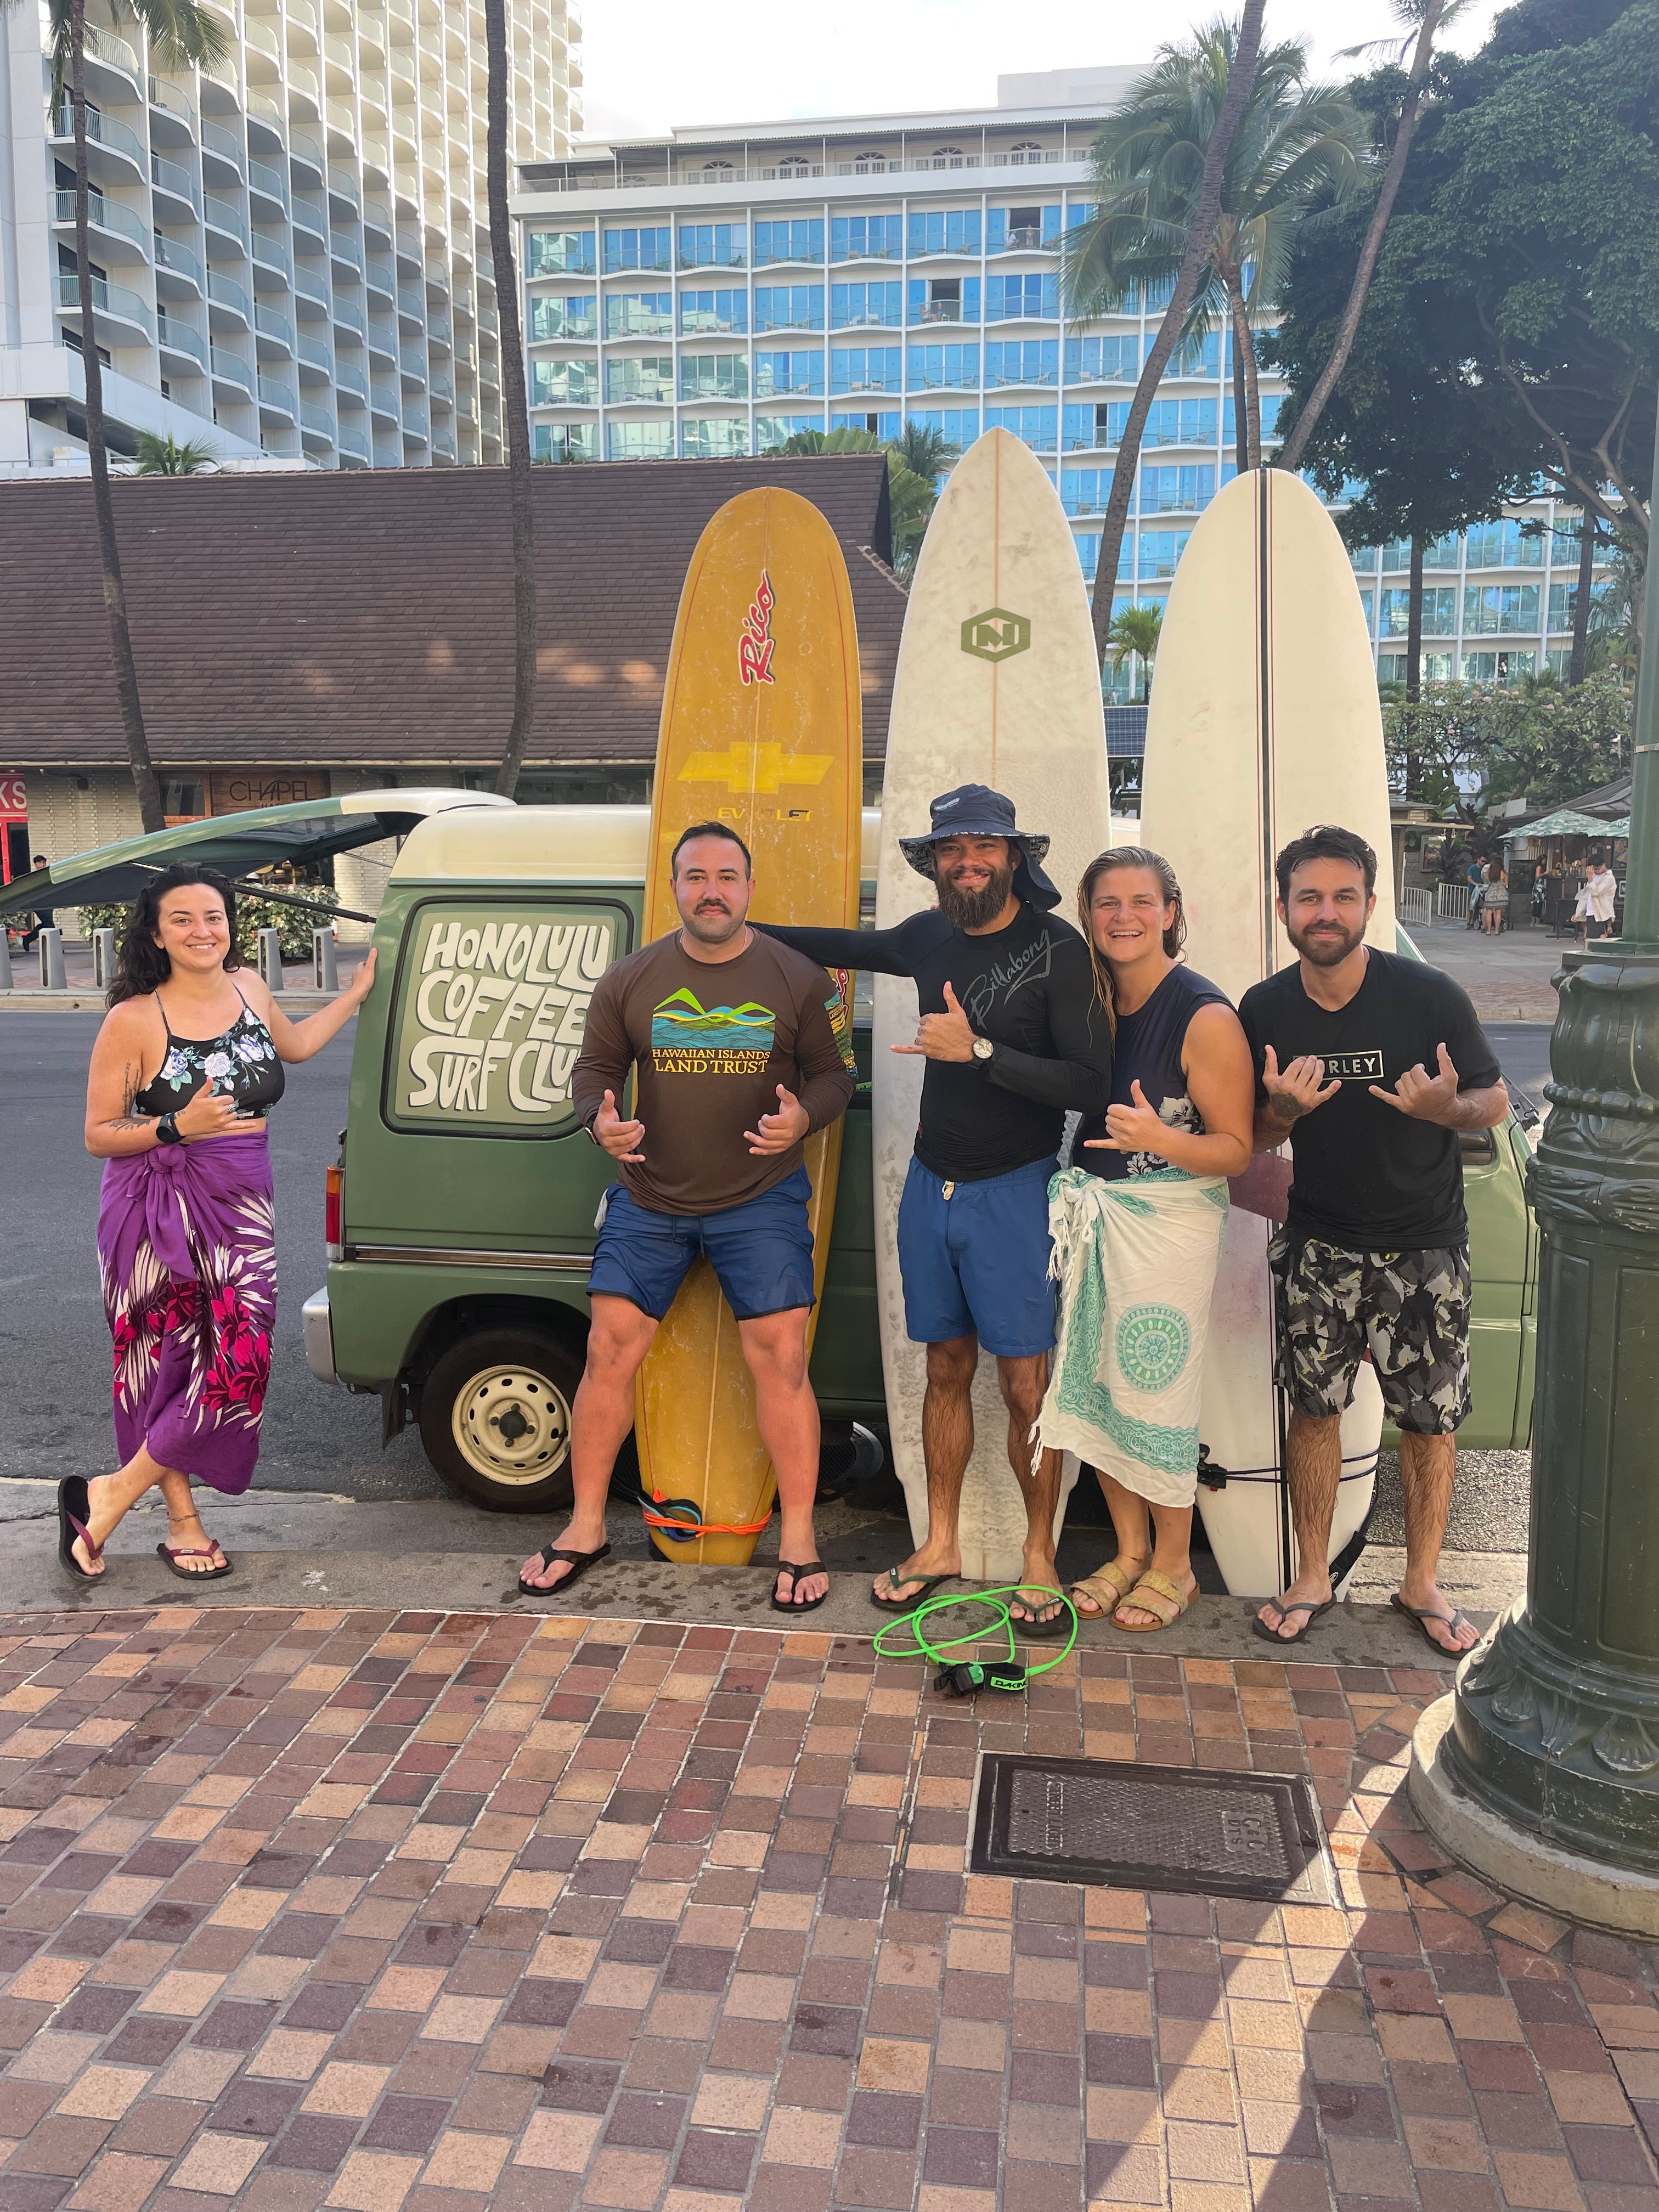 The Honolulu Surf Club